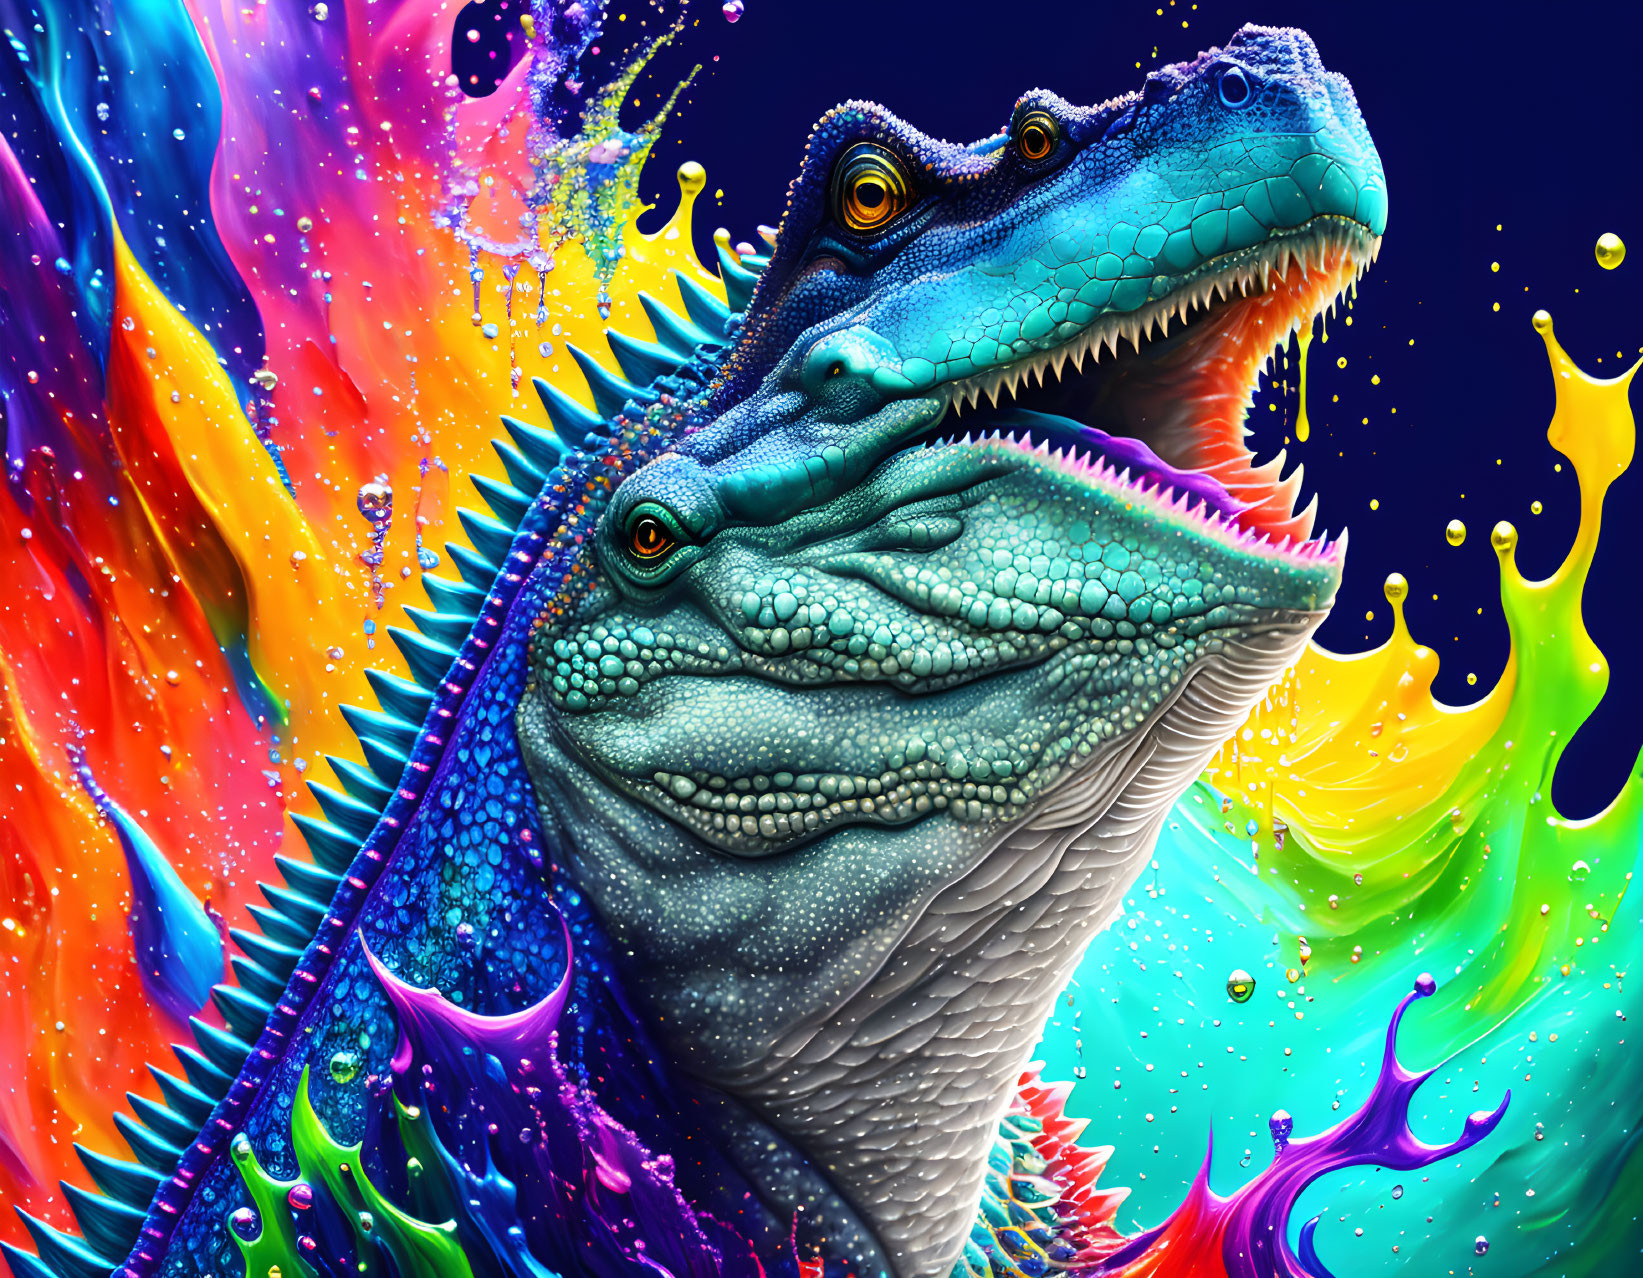 Vibrant textured dinosaur digital artwork with neon splash background